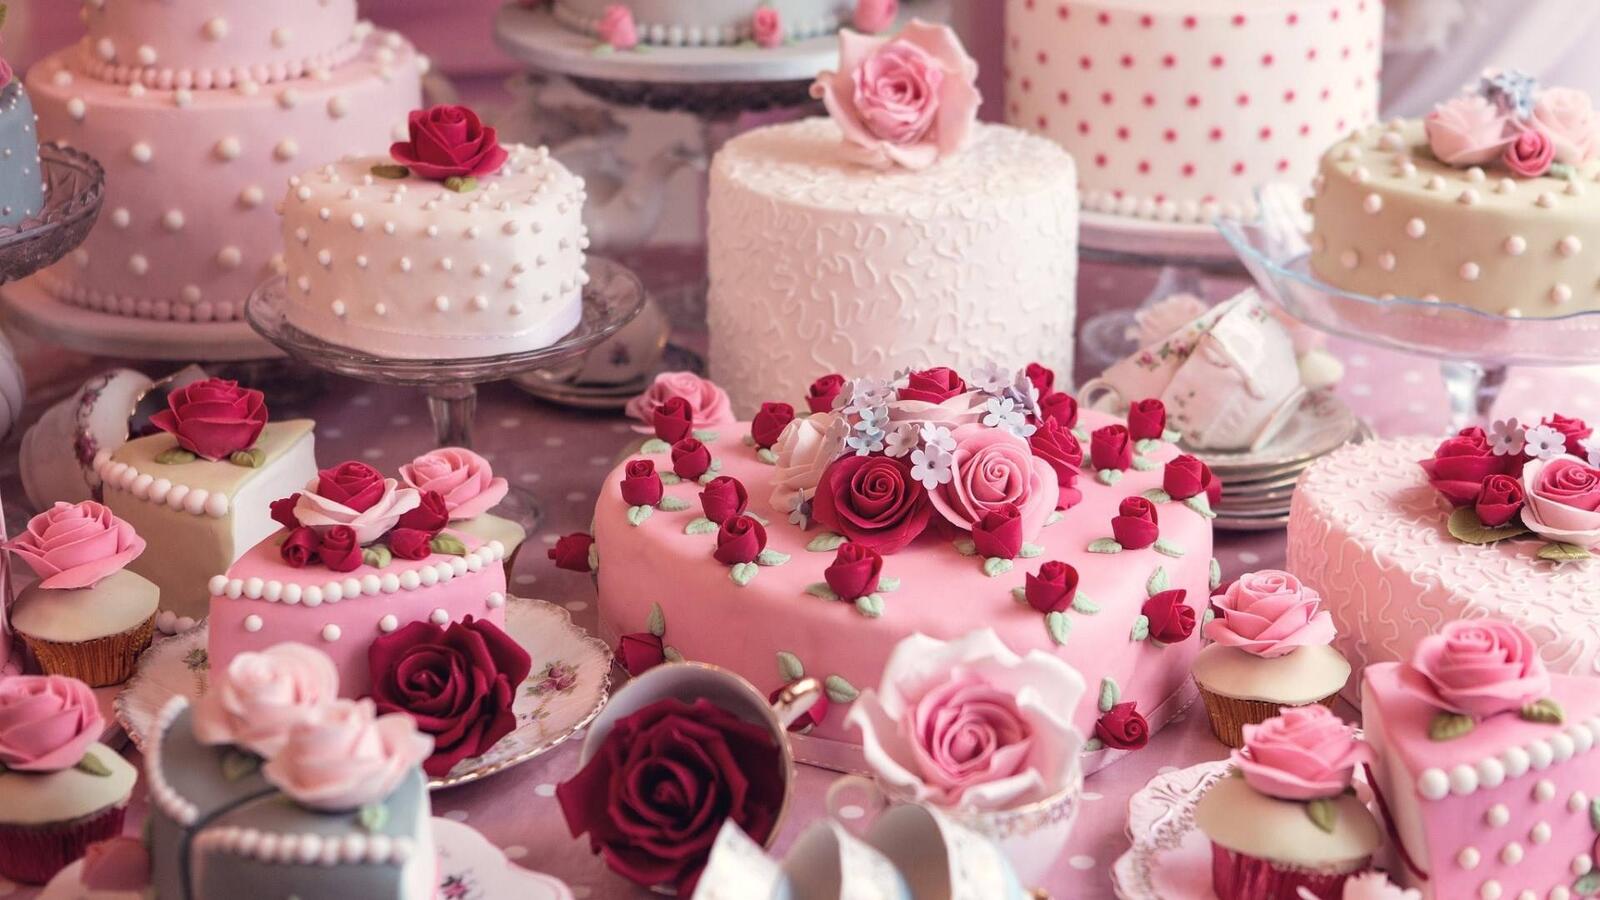 Wallpapers cake pink wedding on the desktop